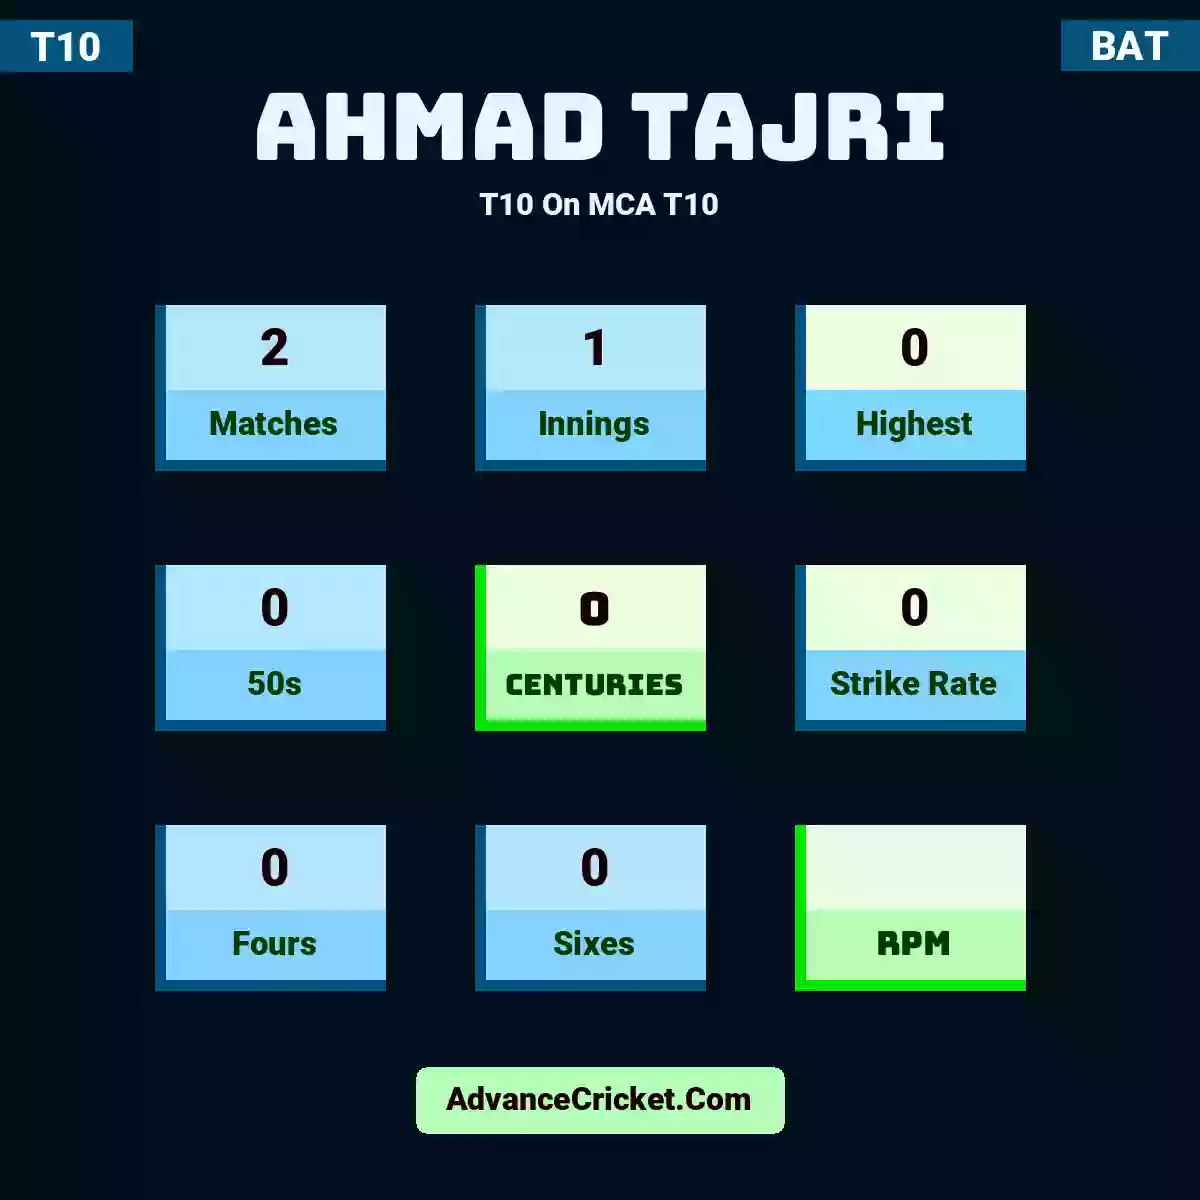 Ahmad Tajri T10  On MCA T10, Ahmad Tajri played 2 matches, scored 0 runs as highest, 0 half-centuries, and 0 centuries, with a strike rate of 0. A.Tajri hit 0 fours and 0 sixes.